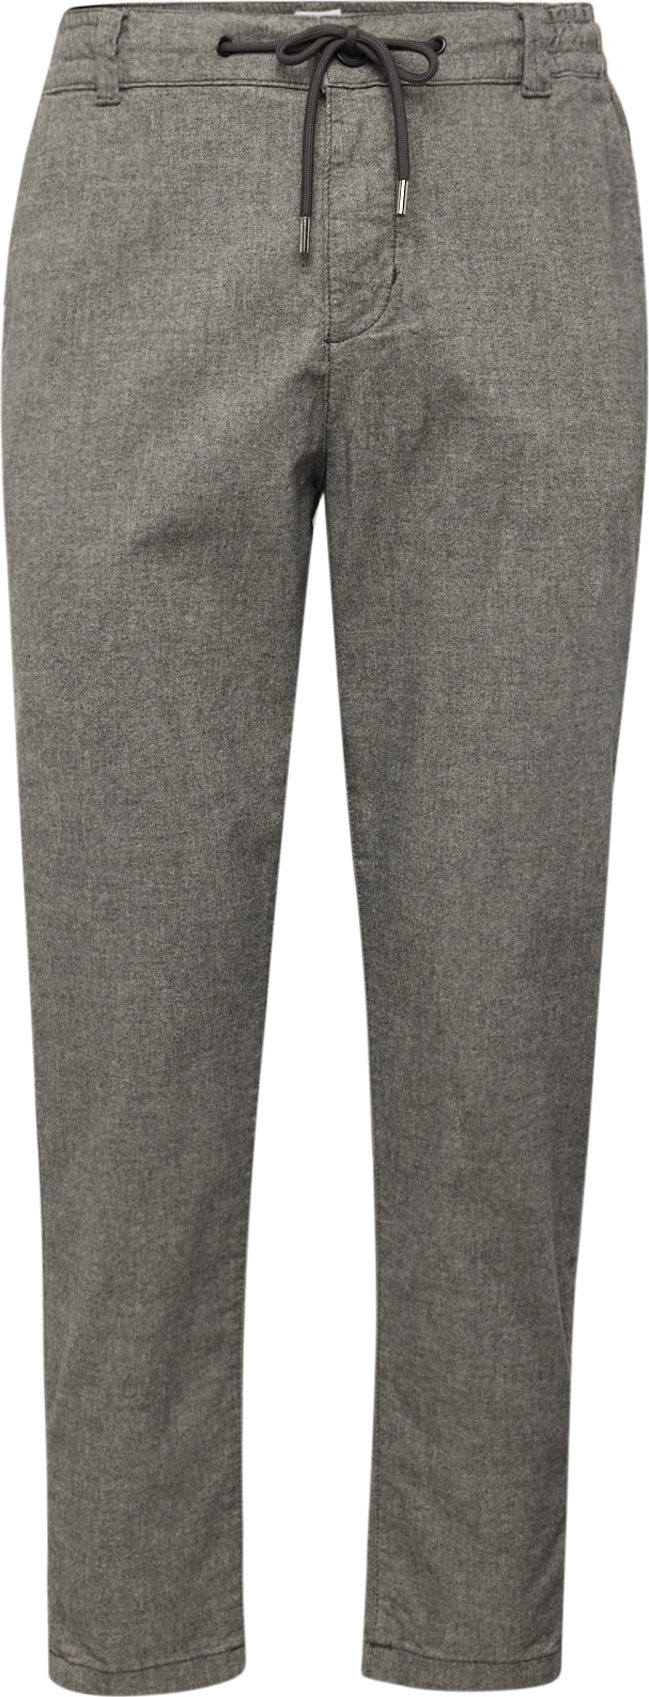 Chino kalhoty mustang šedý melír